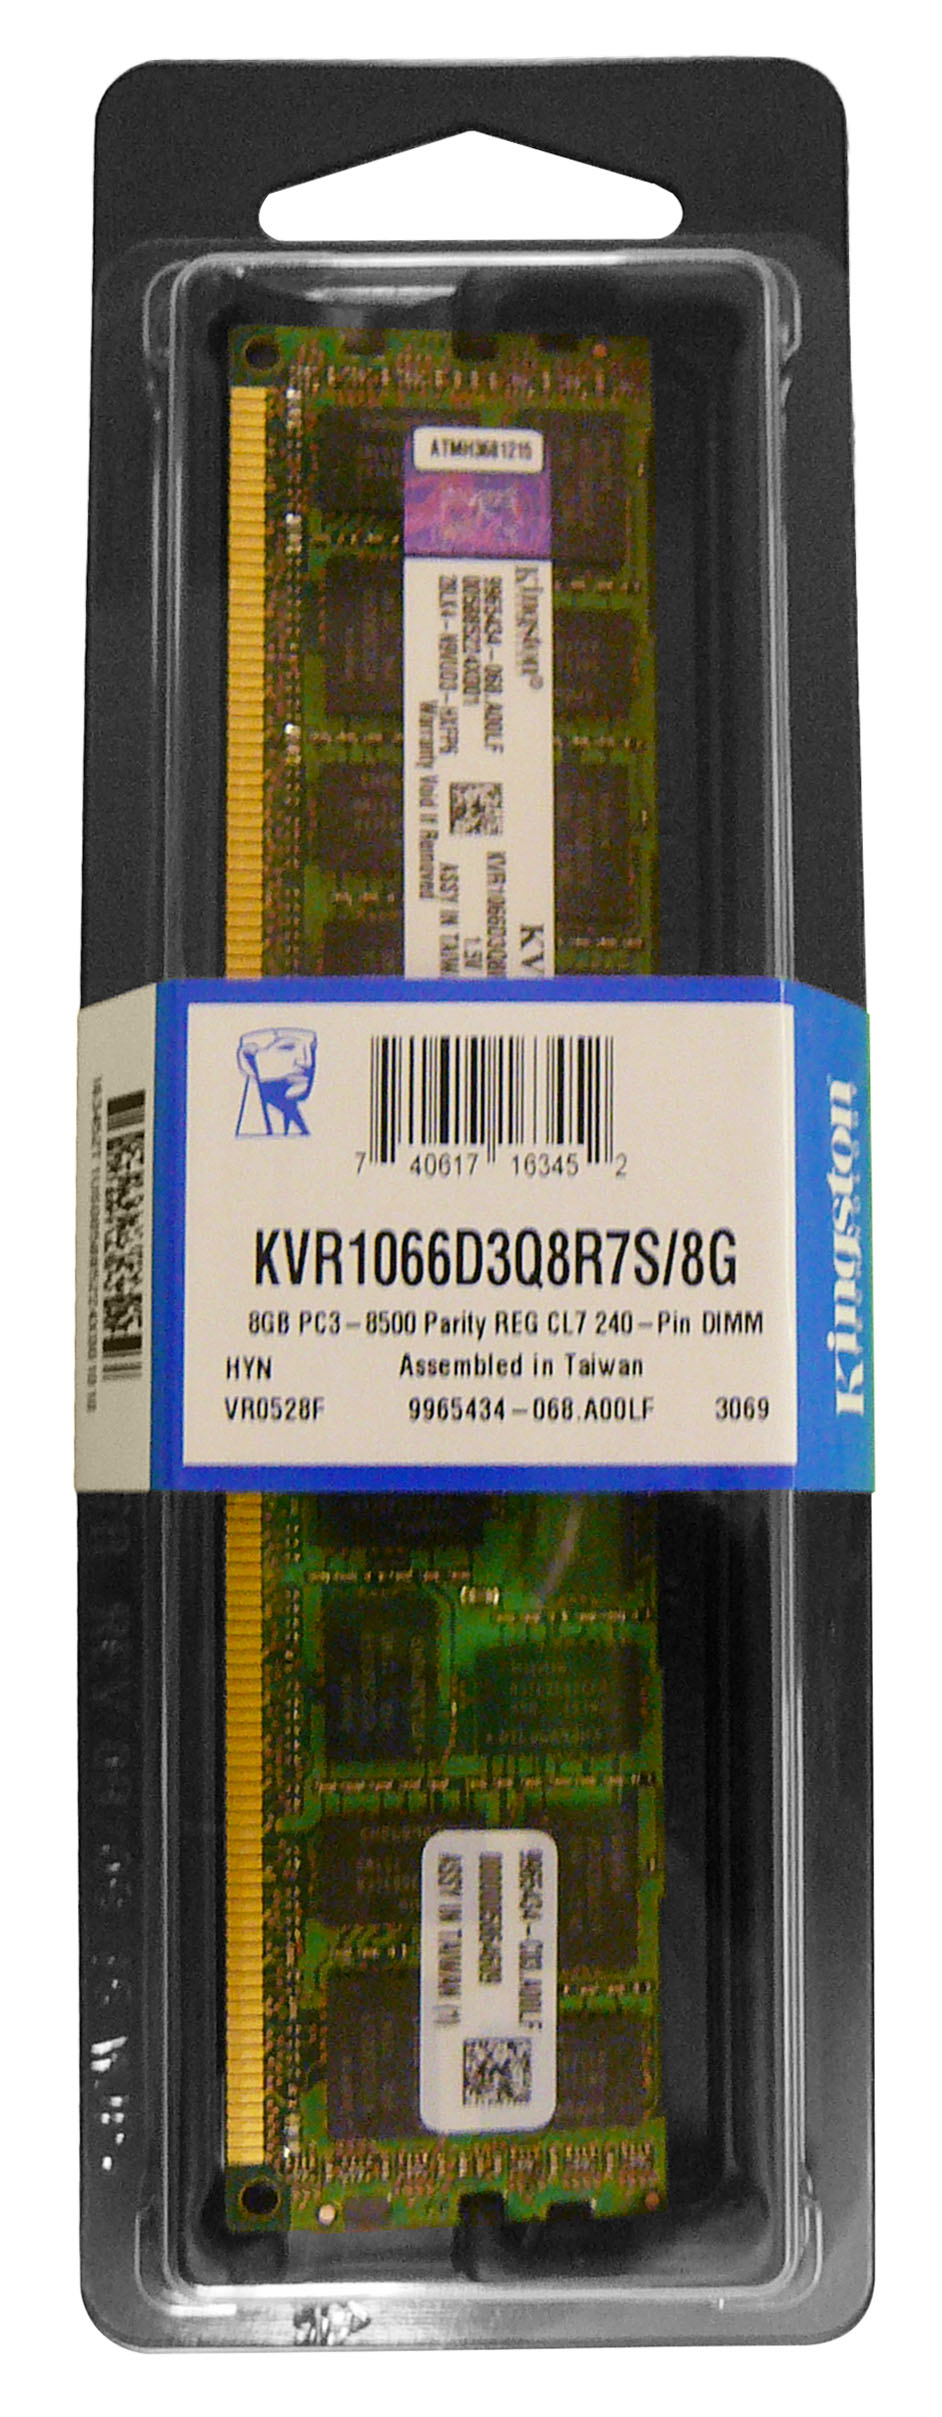 KVR1066D3Q8R7S/8G Kingston 8GB PC3-8500 DDR3-1066MHz ECC Registered CL7 240-Pin DIMM Quad Rank x8 Memory Module with Thermal Sensor